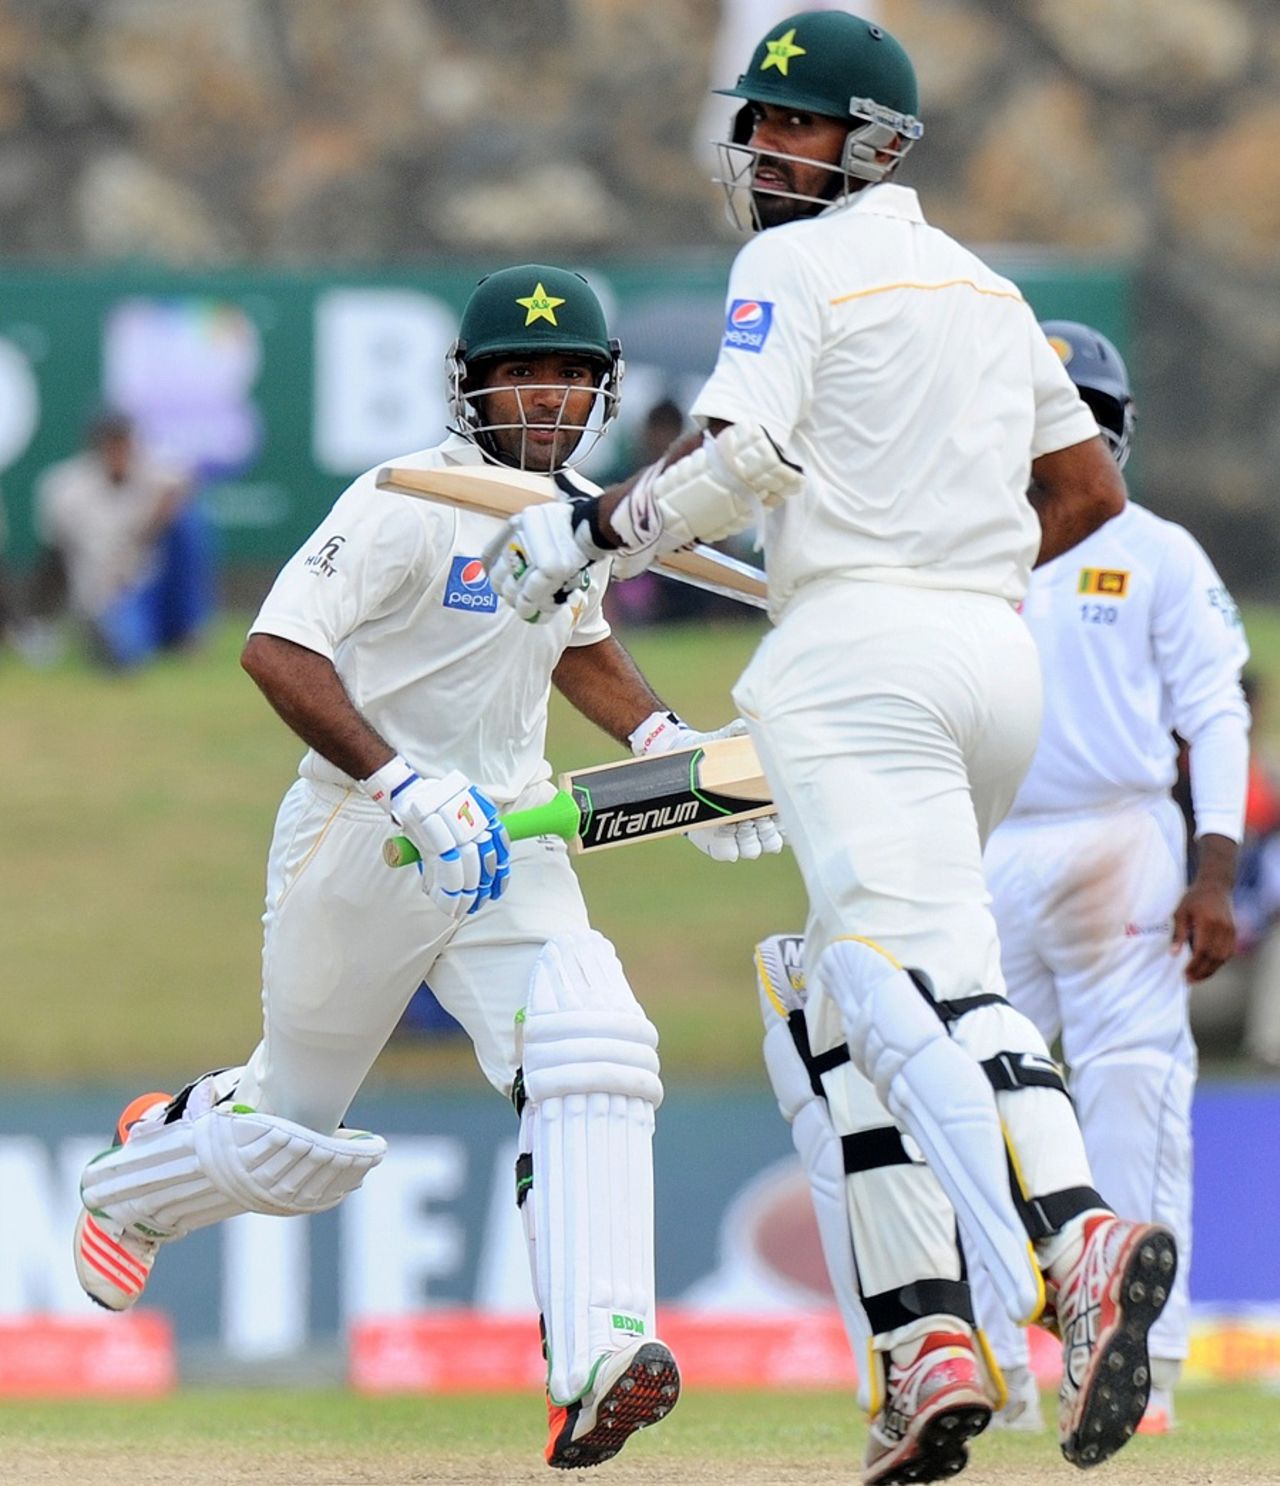 Asad Shafiq and Wahab Riaz put on 38 runs for the seventh wicket, Sri Lanka v Pakistan, 1st Test, Galle, 4th day, June 20, 2015